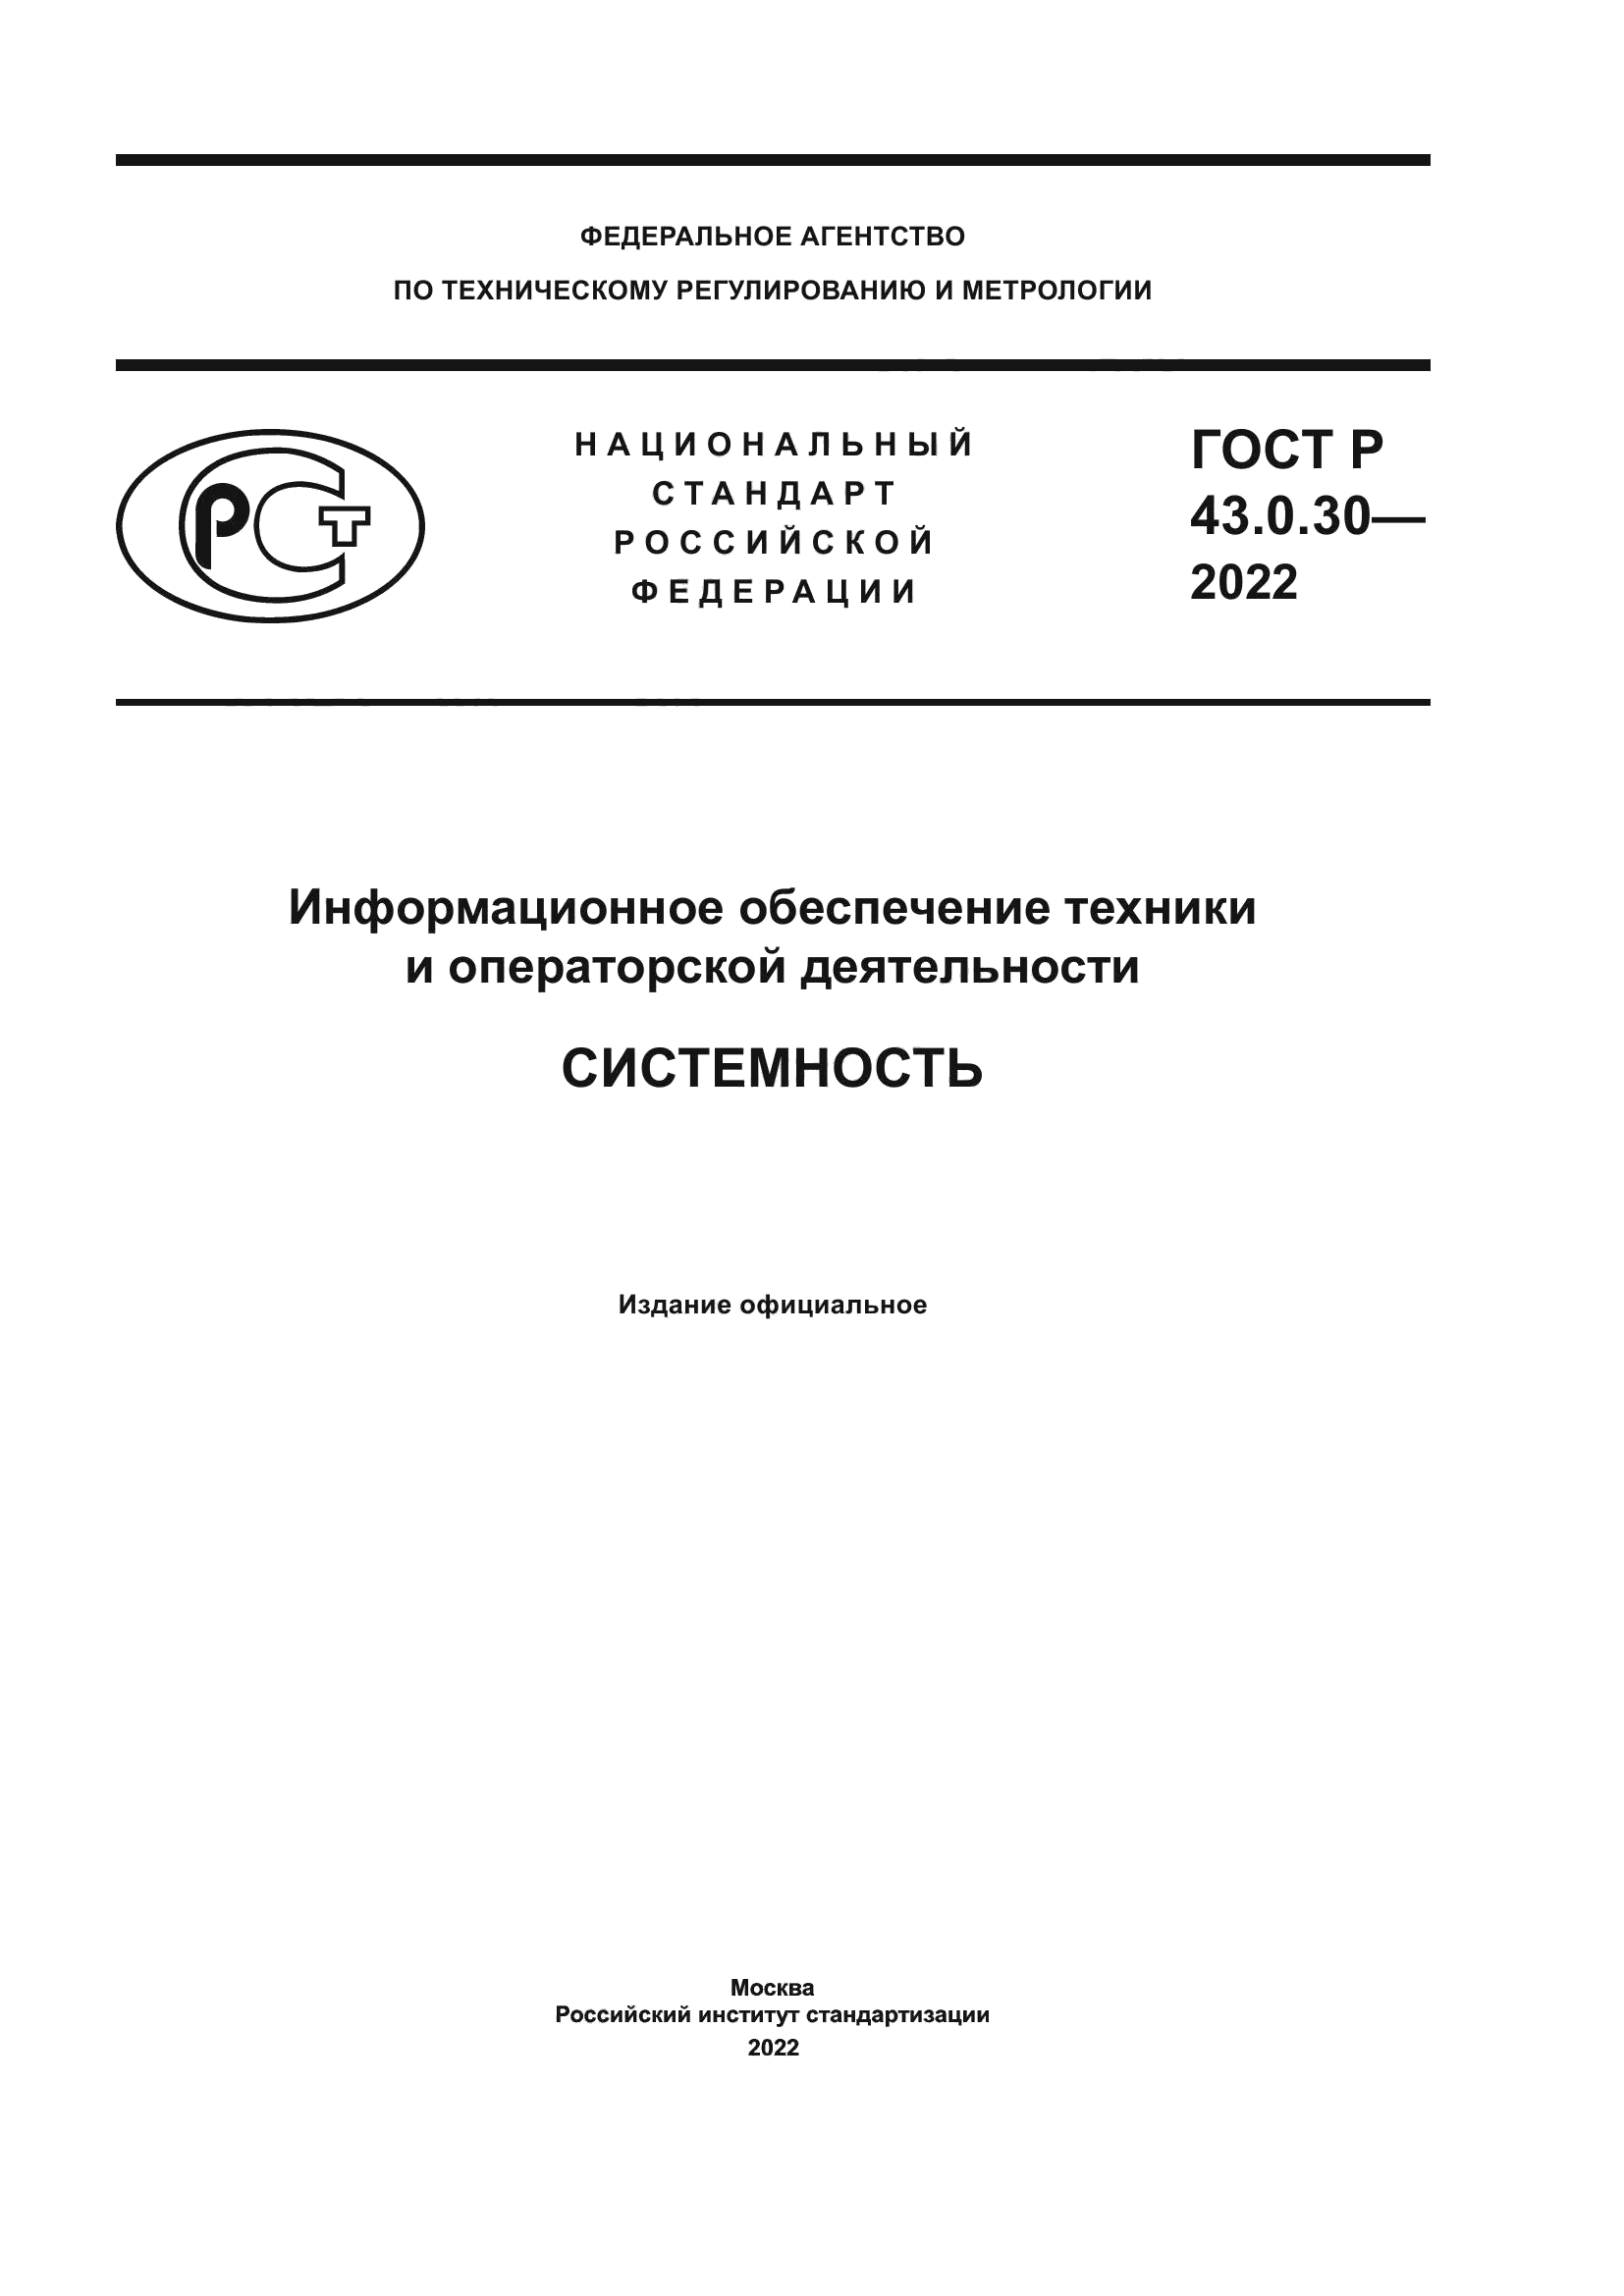 ГОСТ Р 43.0.30-2022